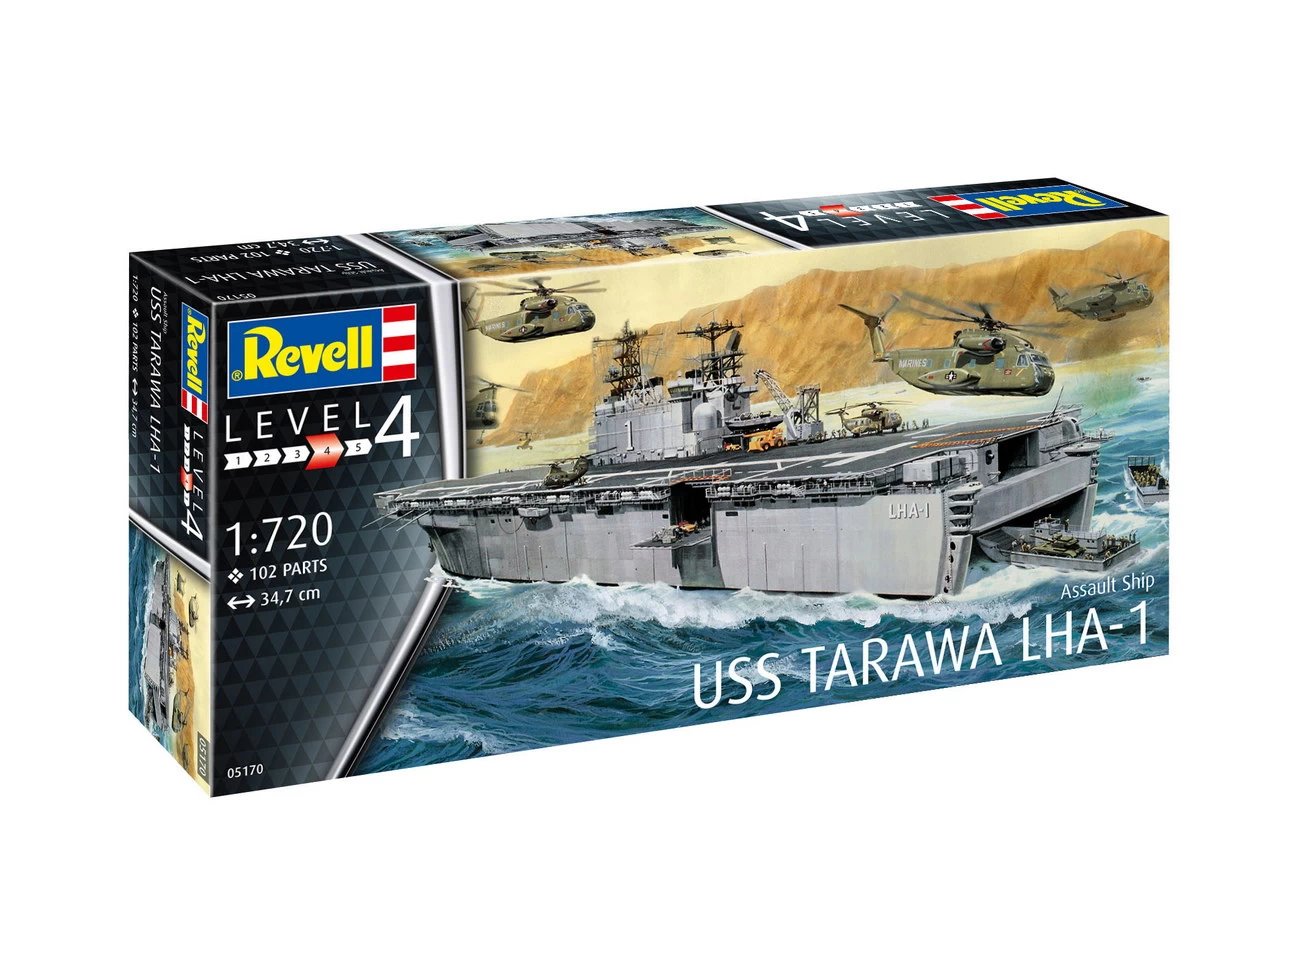 Revell 05170 - Assault Ship USS Tarawa LHA-1